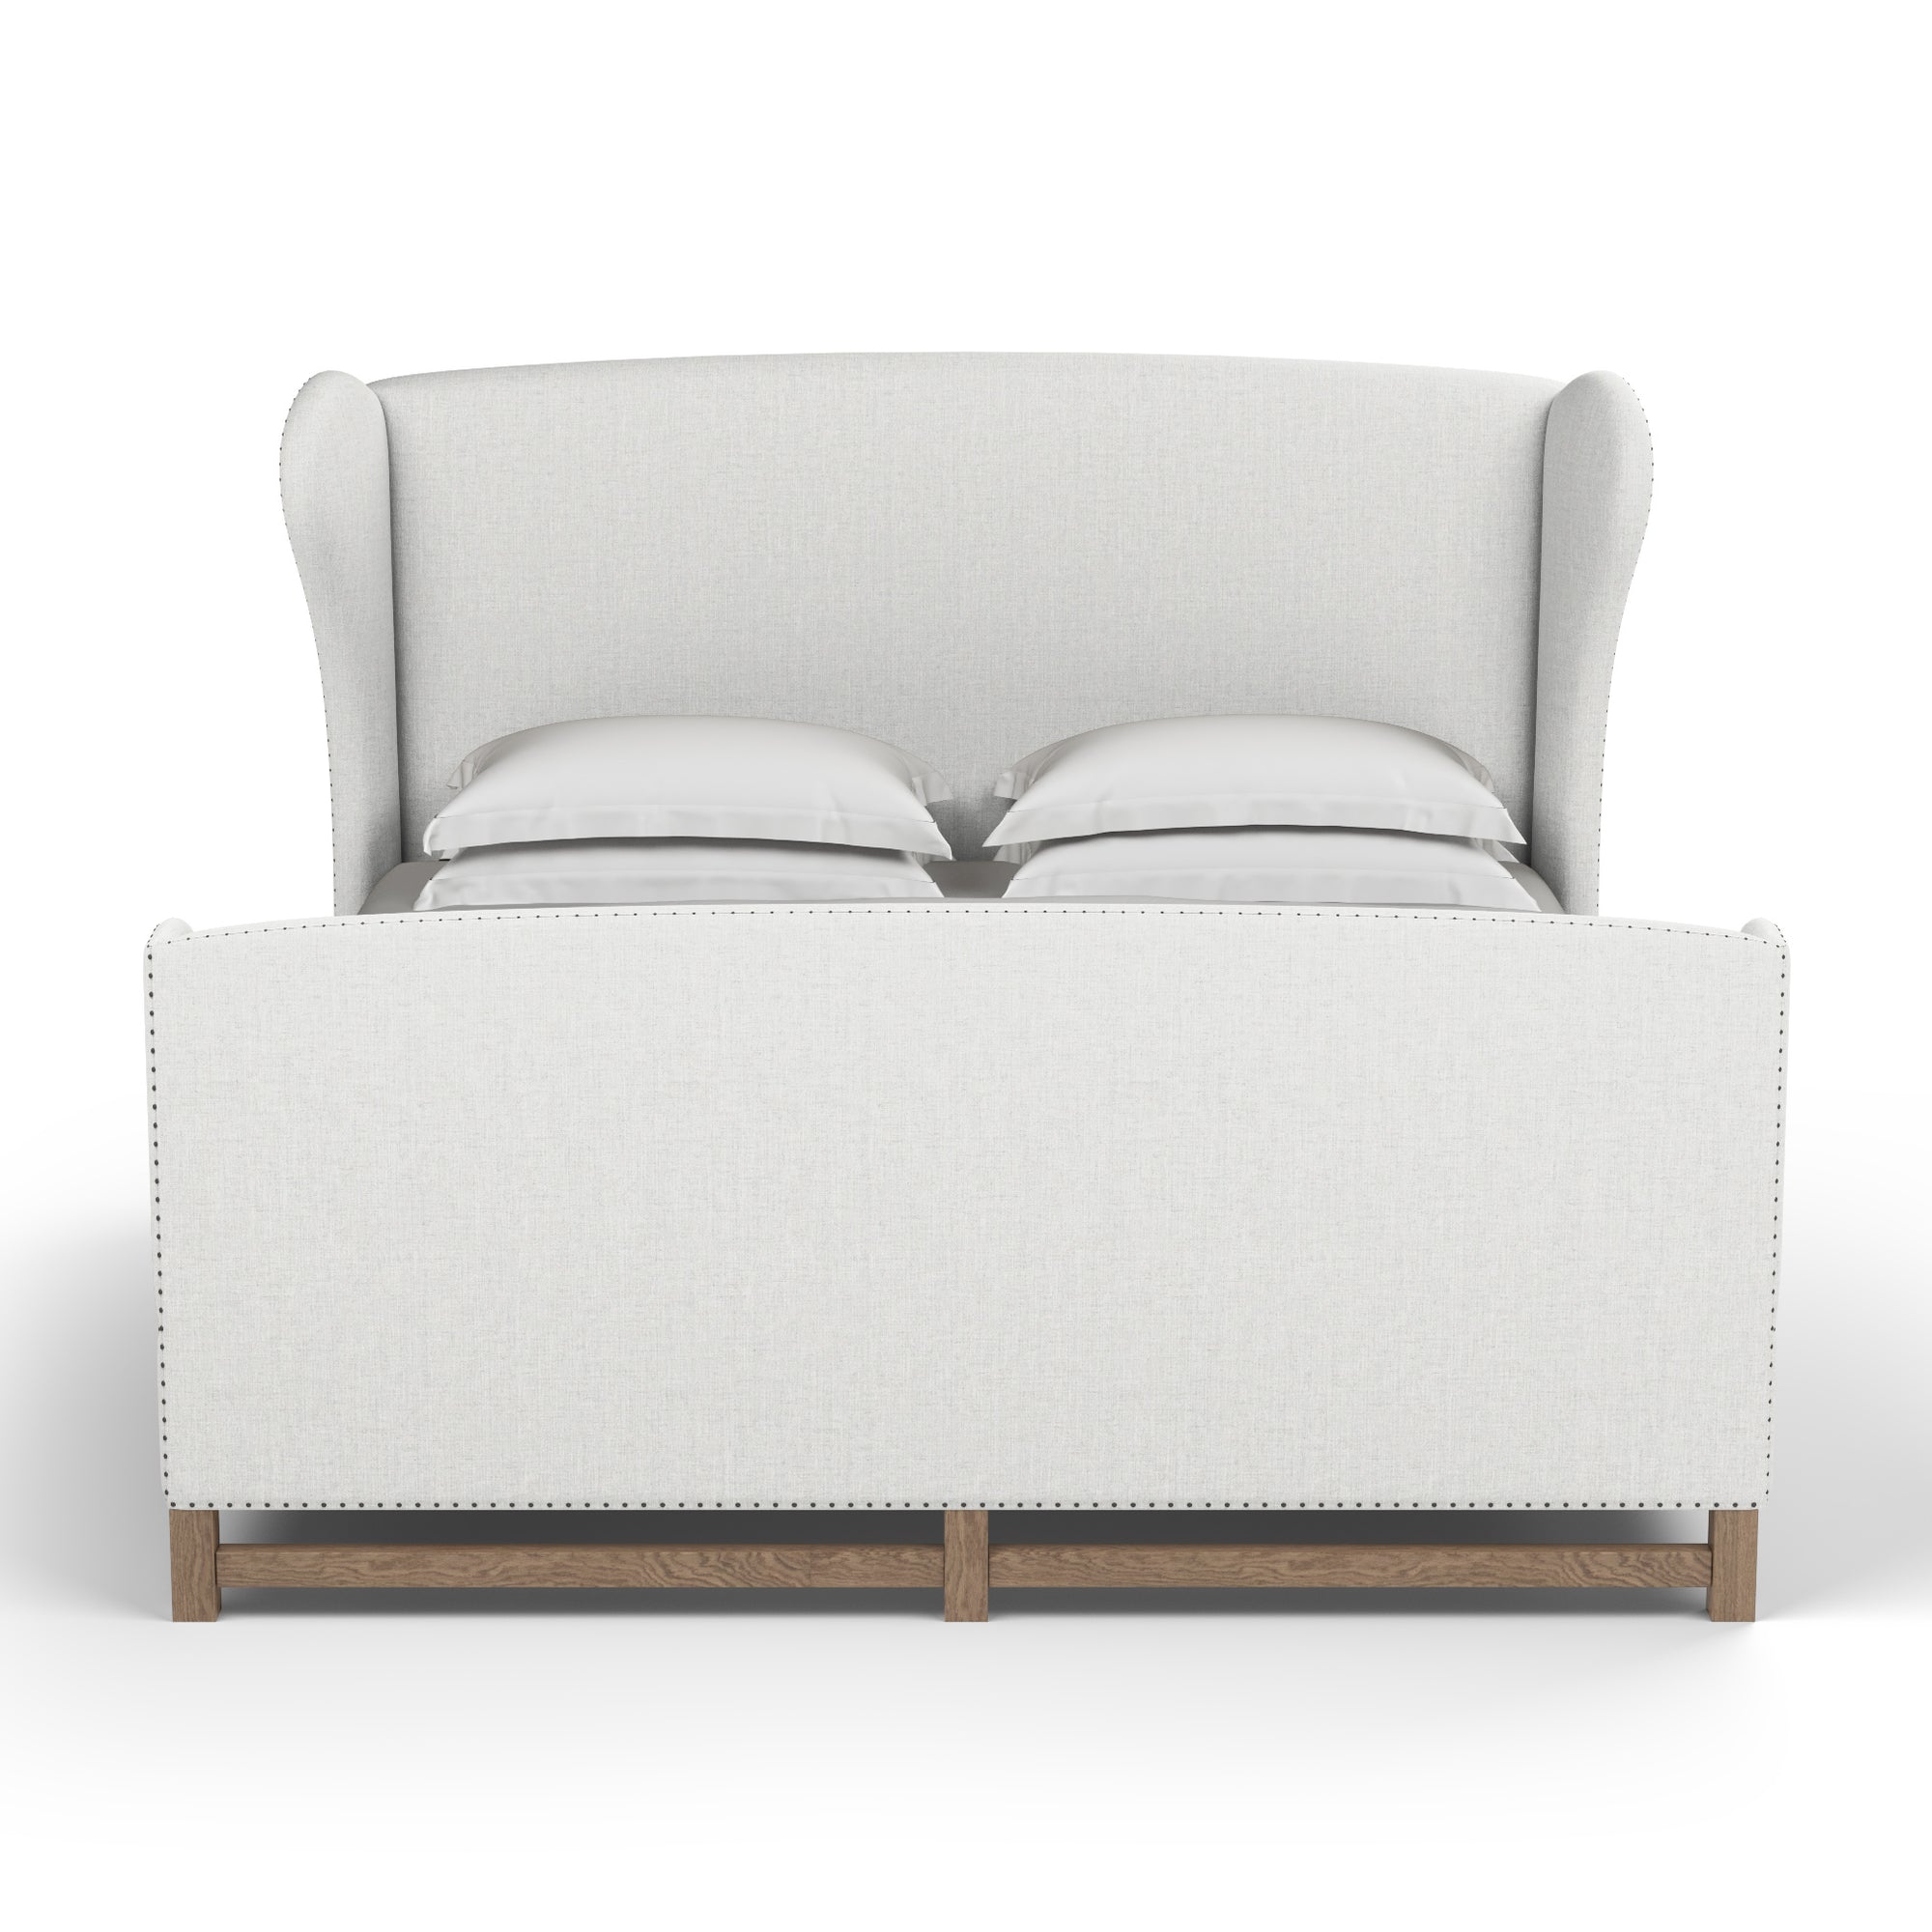 Herbert Wingback Bed w/ Footboard - Blanc Box Weave Linen